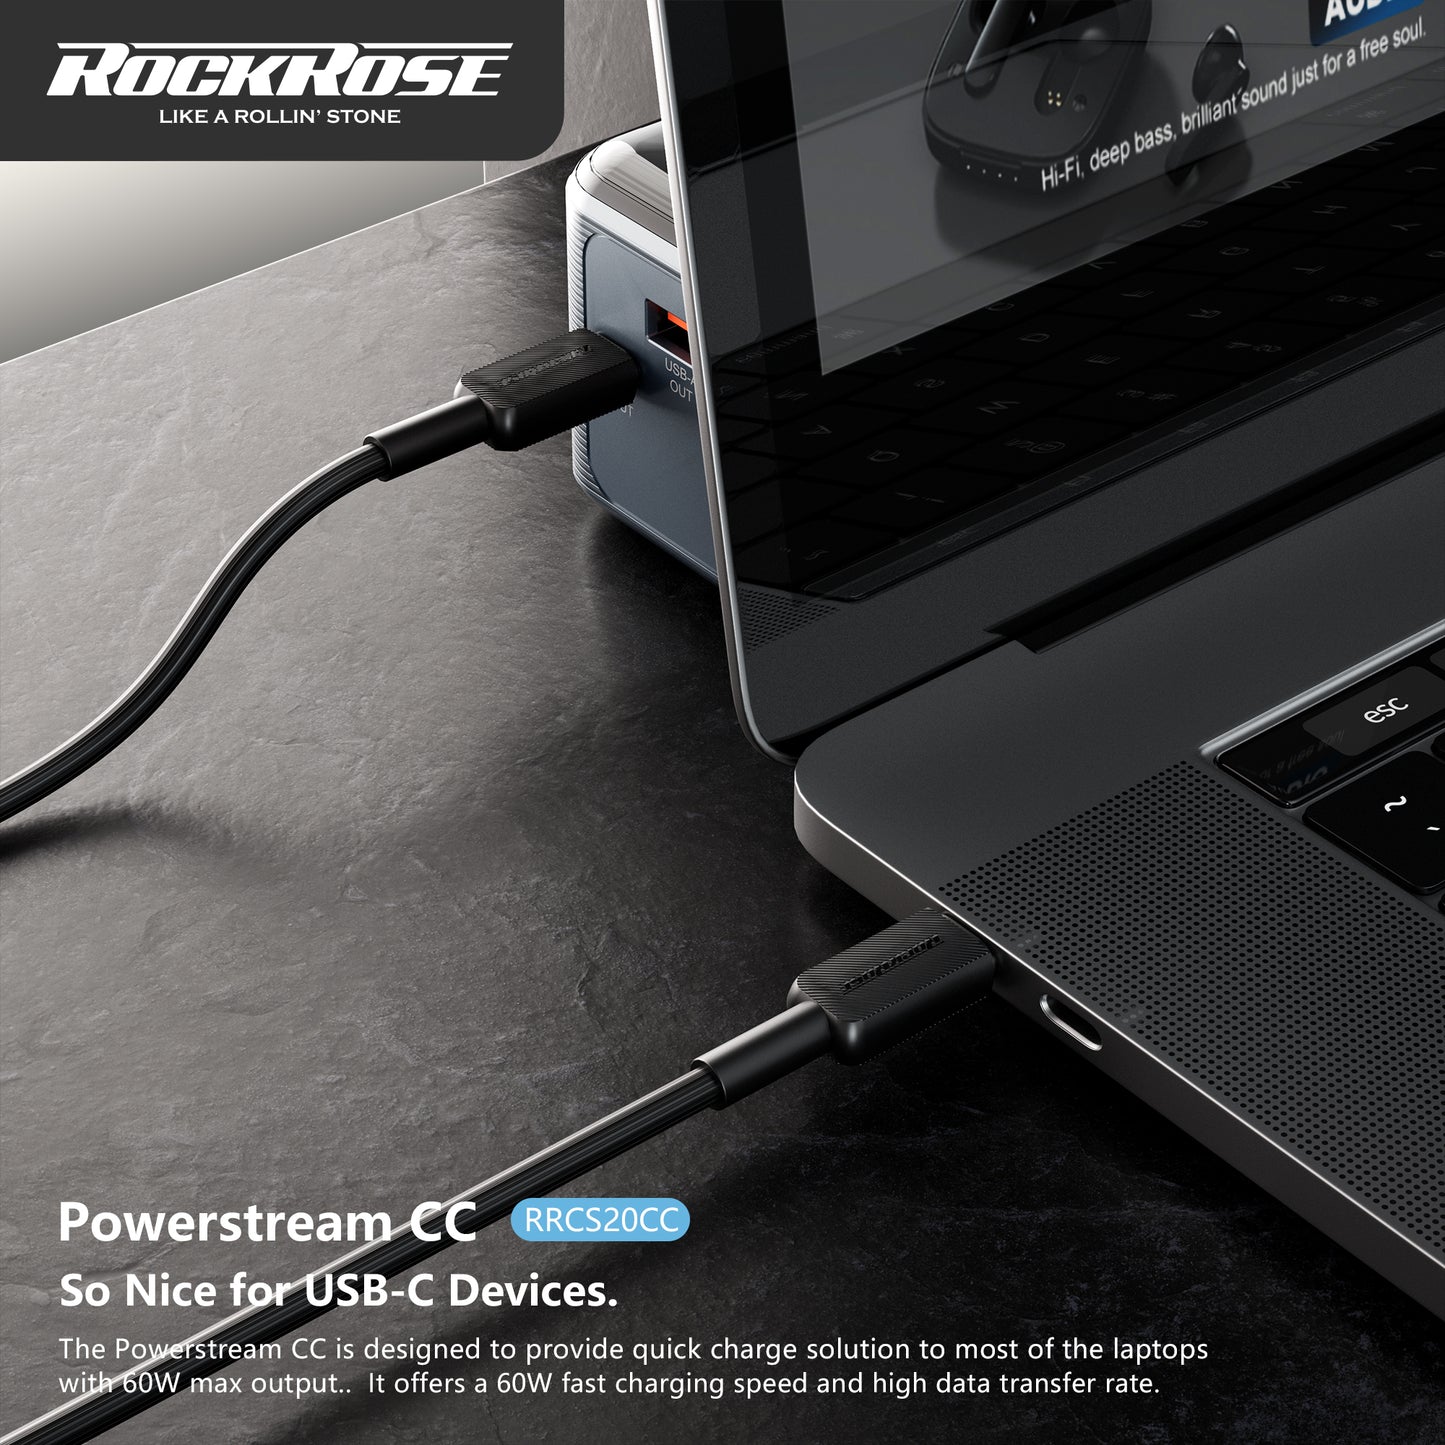 RockRose Powerstream CC 3A 60W Max 1M USB-C to USB-C Cable